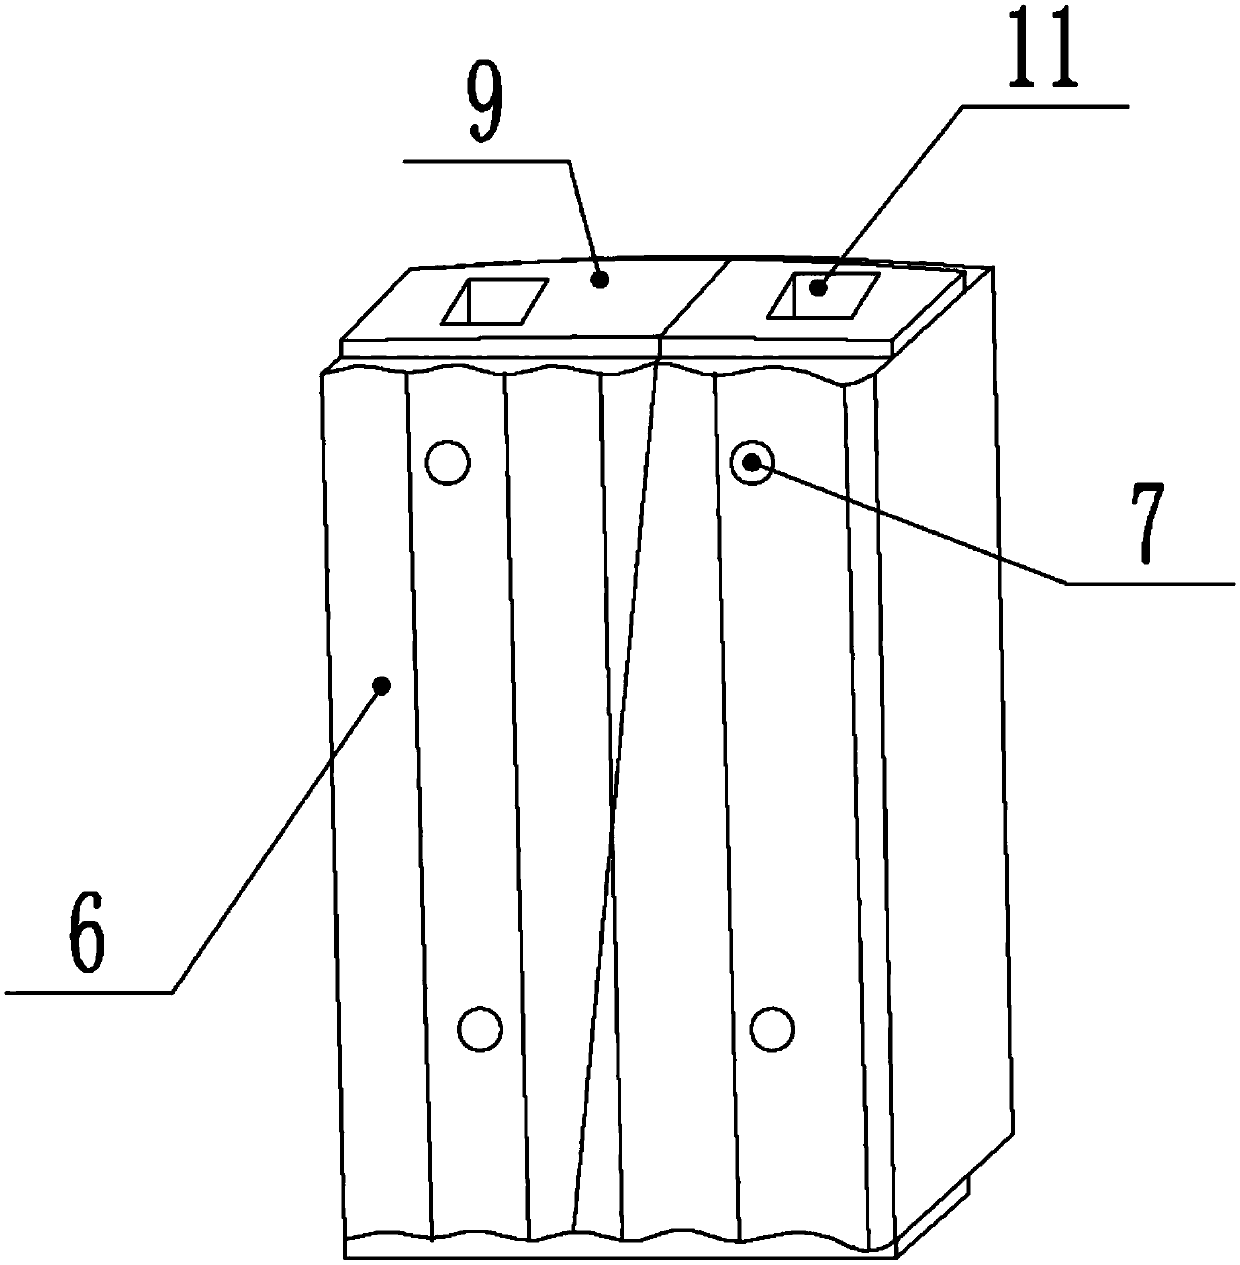 Inner cylinder for preheater